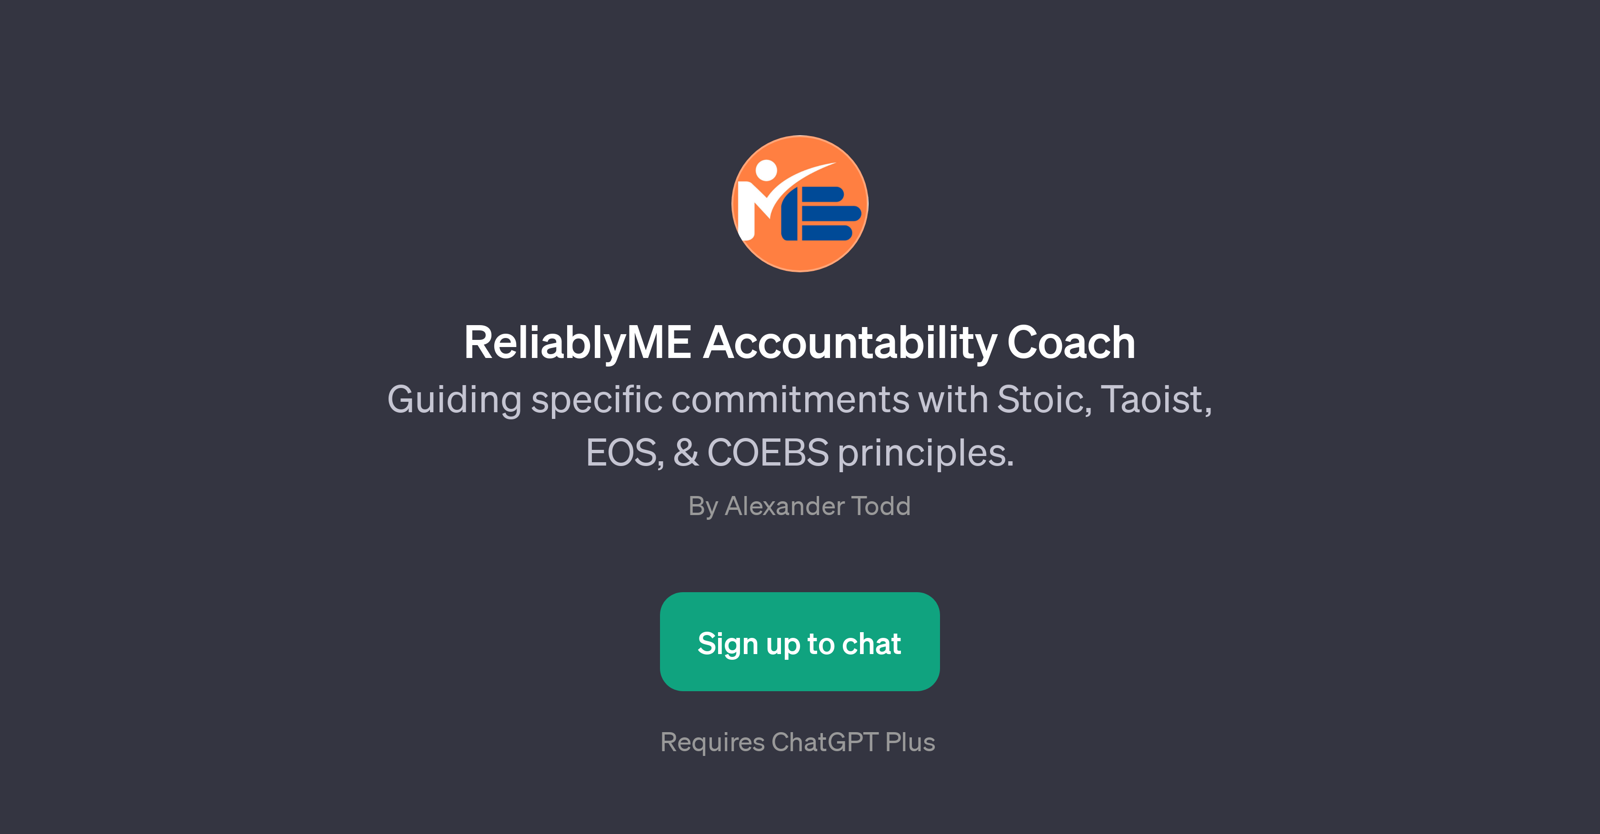 ReliablyME Accountability Coach website